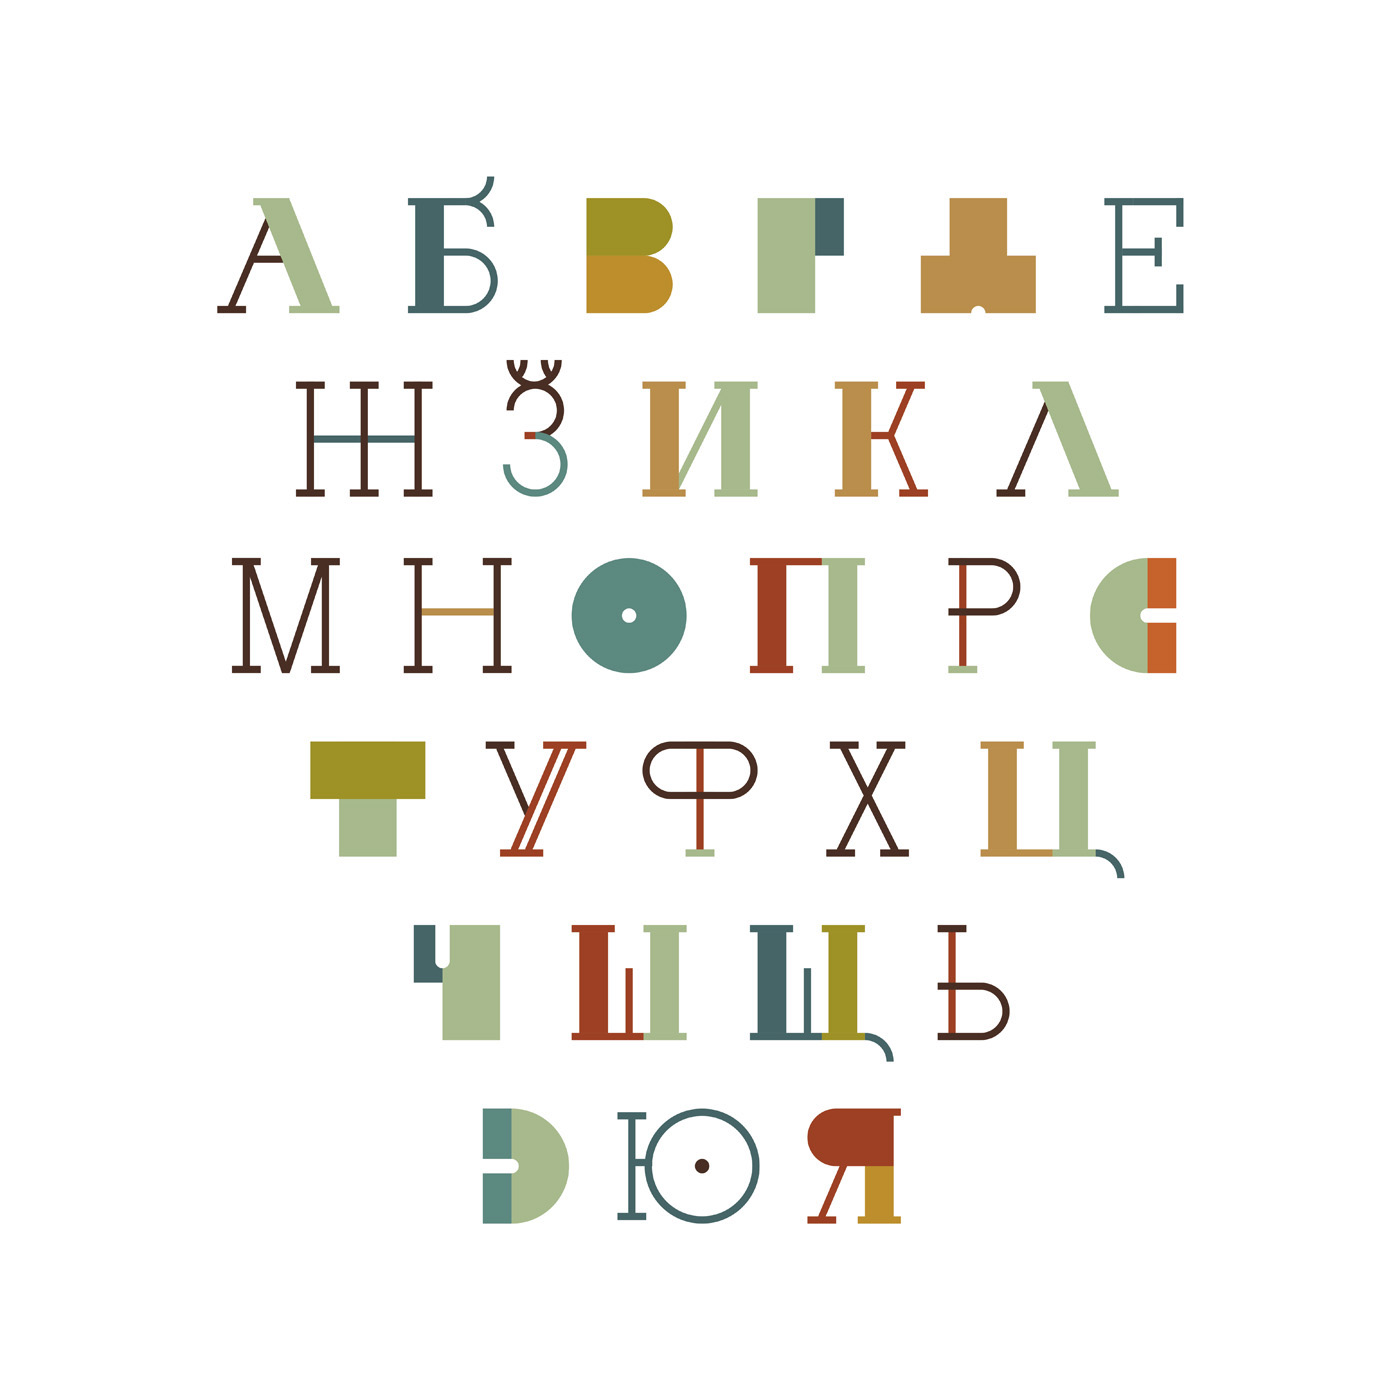 type font design broshure book citybranding brand vologda crafted folk church north вологда Russia madeinrussia